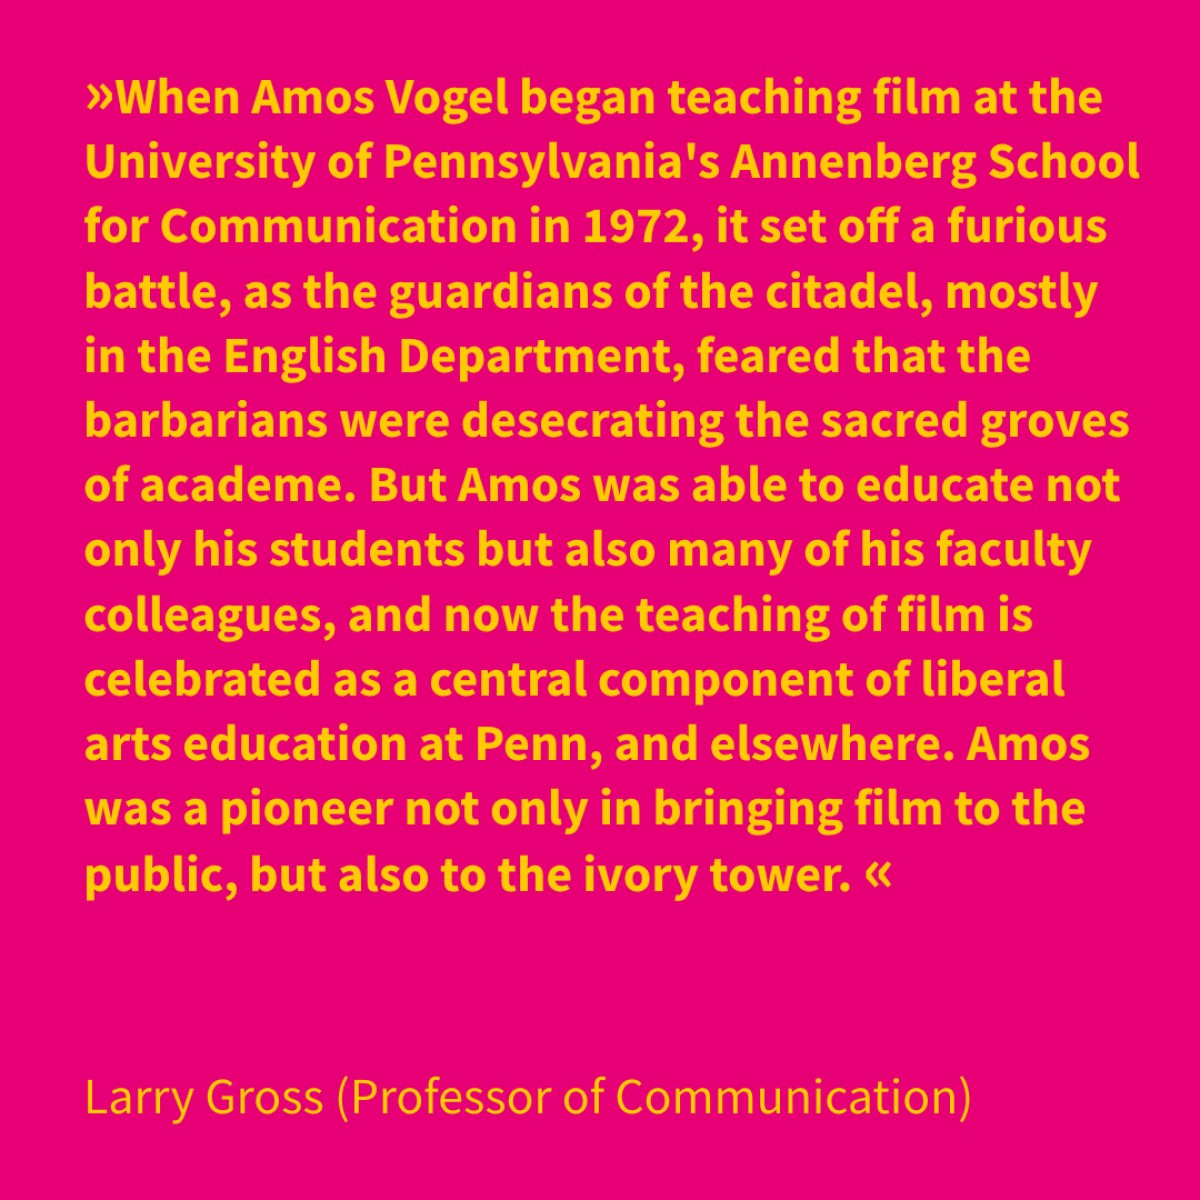 Larry Gross (Professor of Communication)